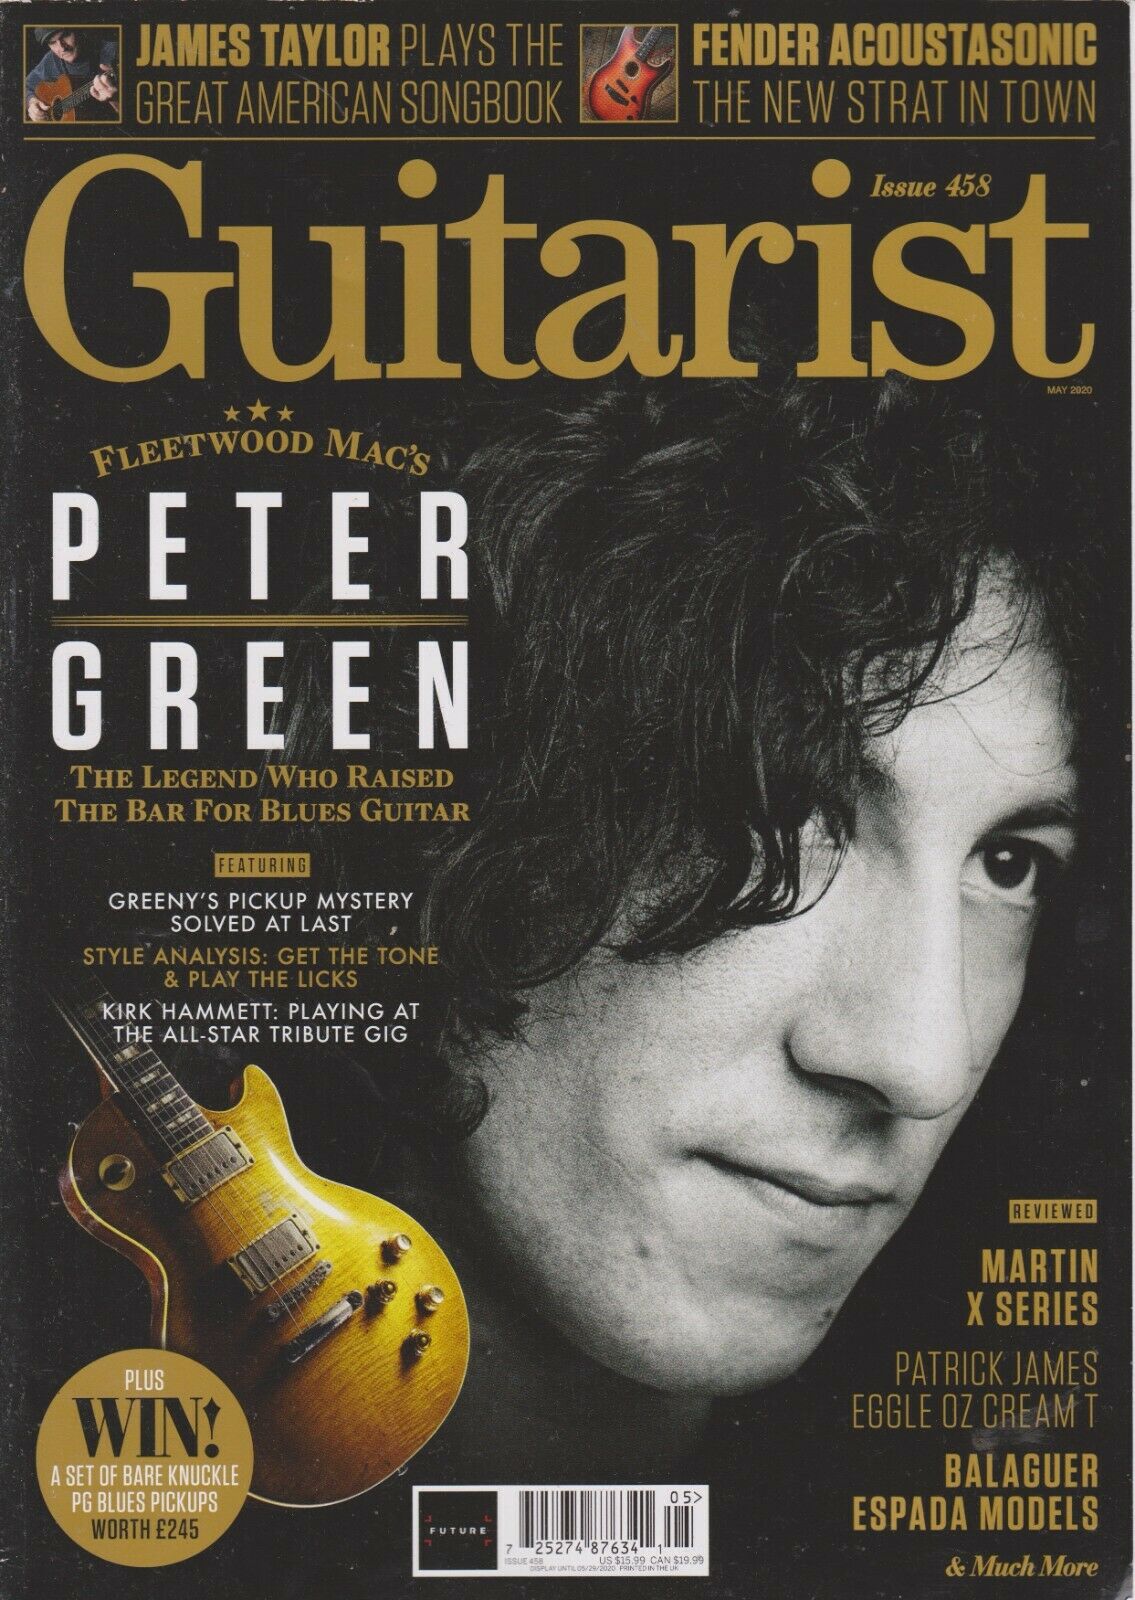 Guitarist magazine #458 Peter Green Fleetwood Mac